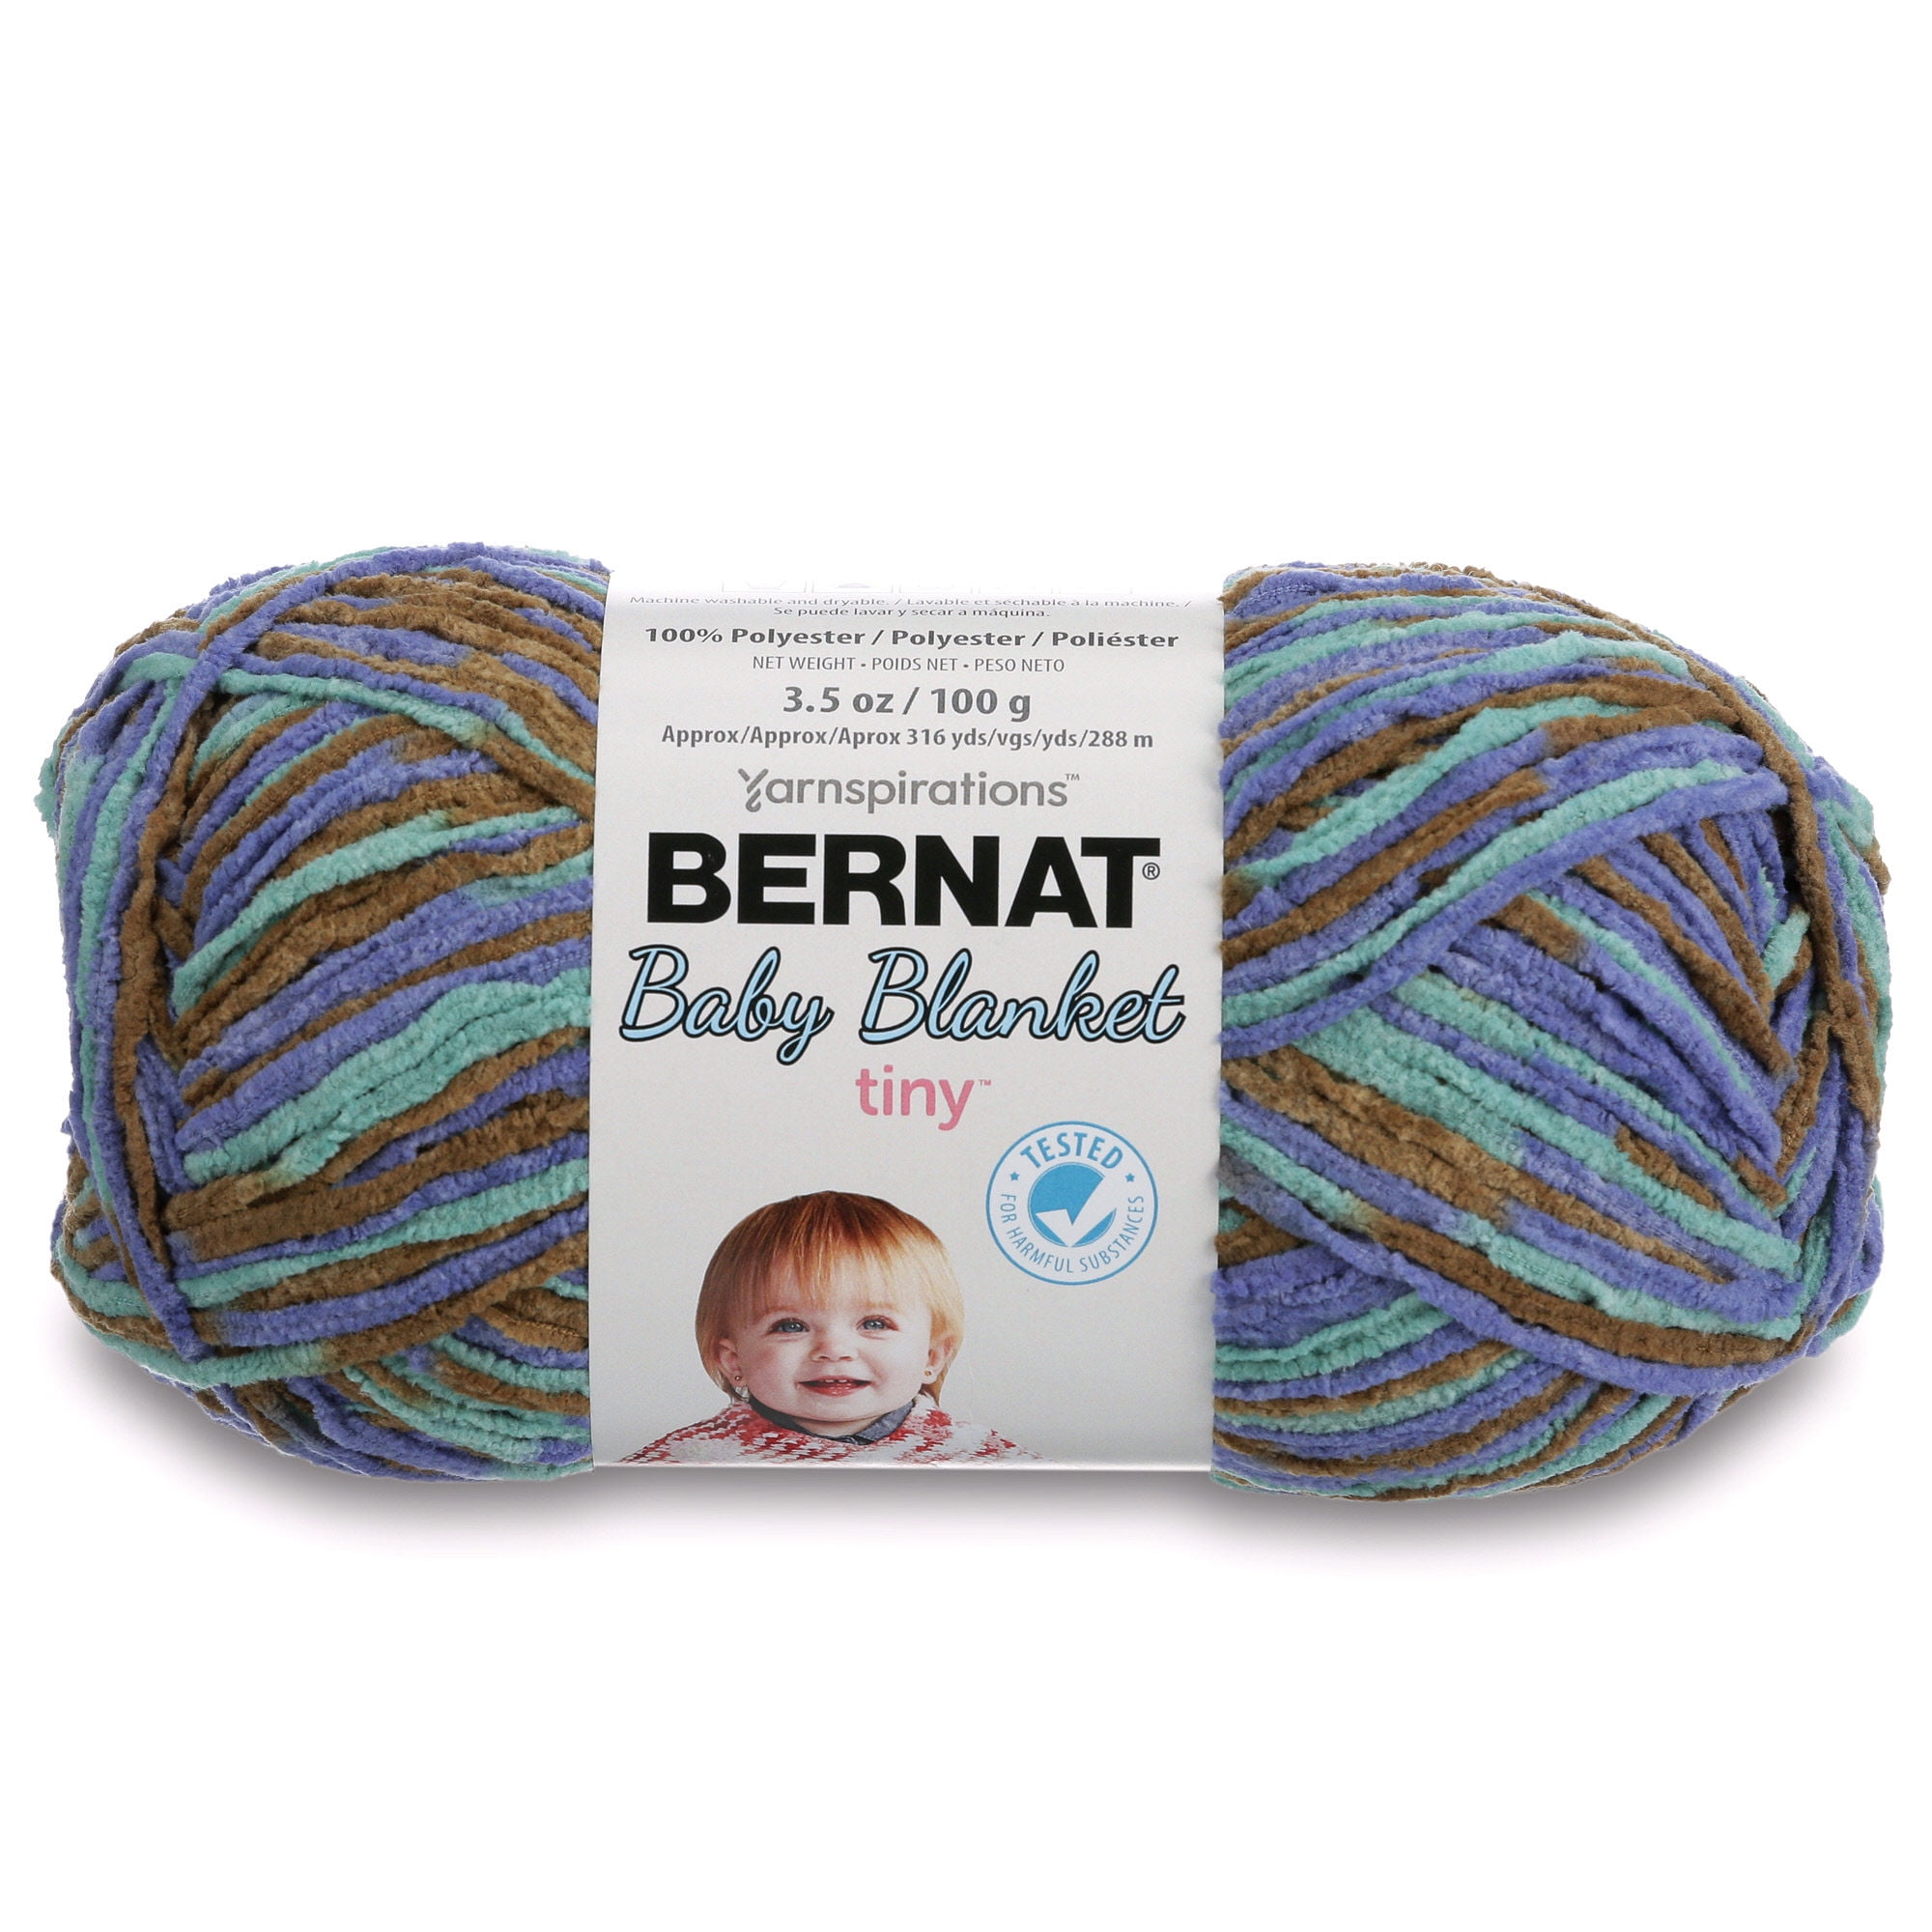 LITTLE ROSES Bernat Baby Blanket COLOR 04418 10.5 Oz258 Yards Blanket Yarn  for Girls Rose and Brown Yarn Baby Toddlerchenille Yarn 